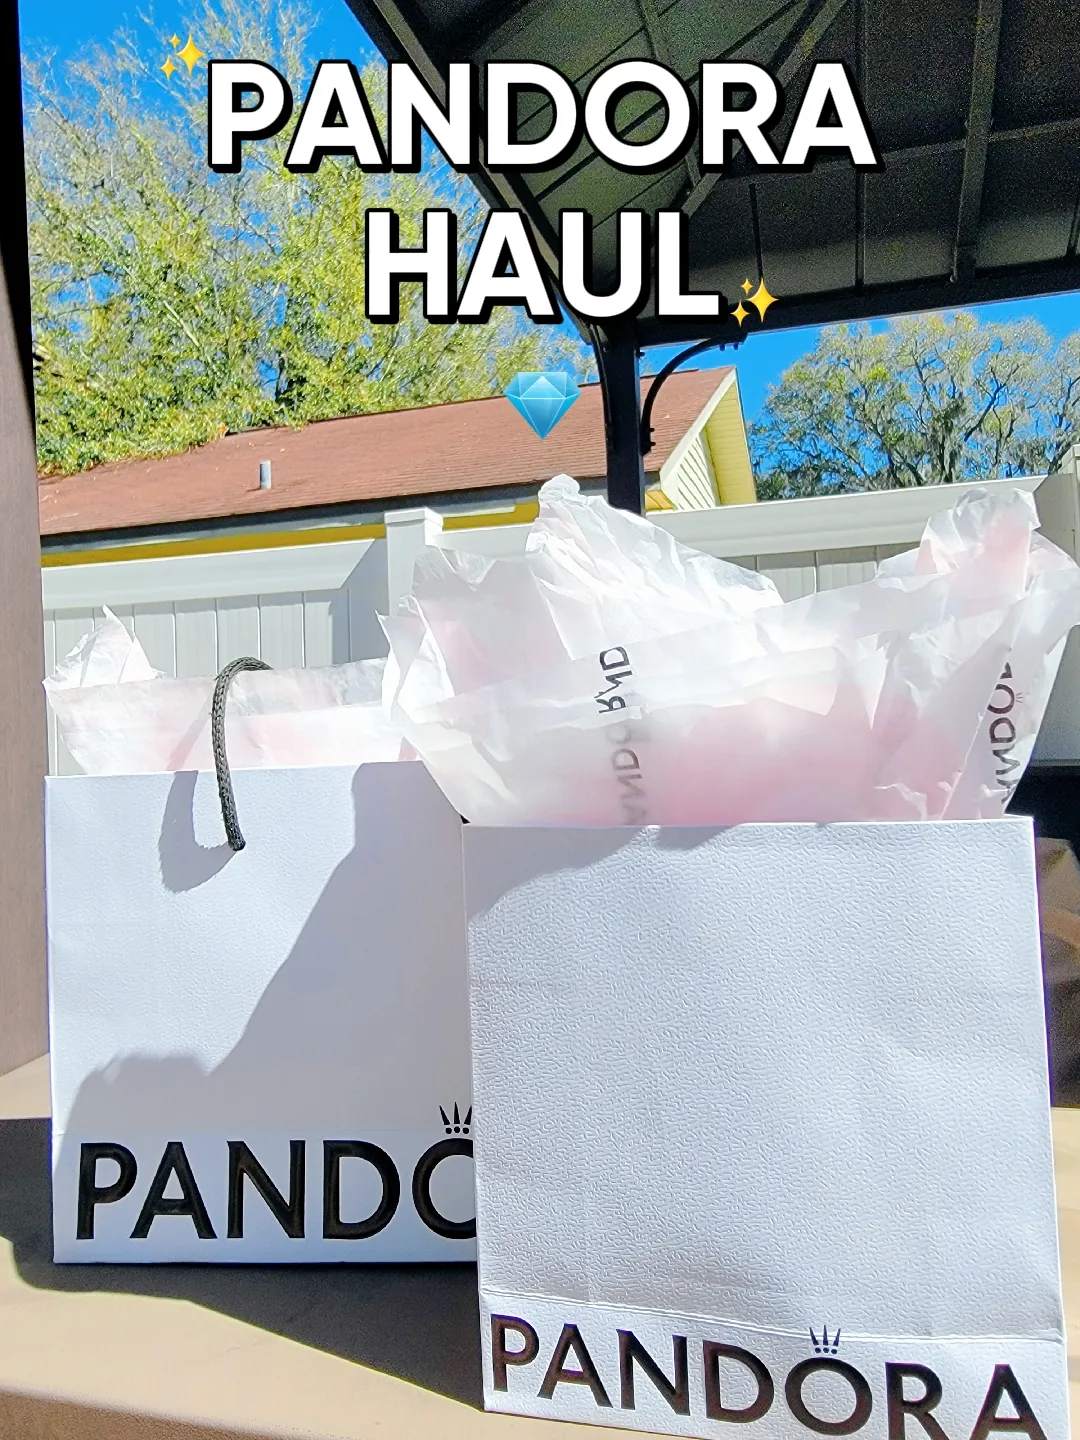 Pandora haul + cute backstory 🥹✨'s images